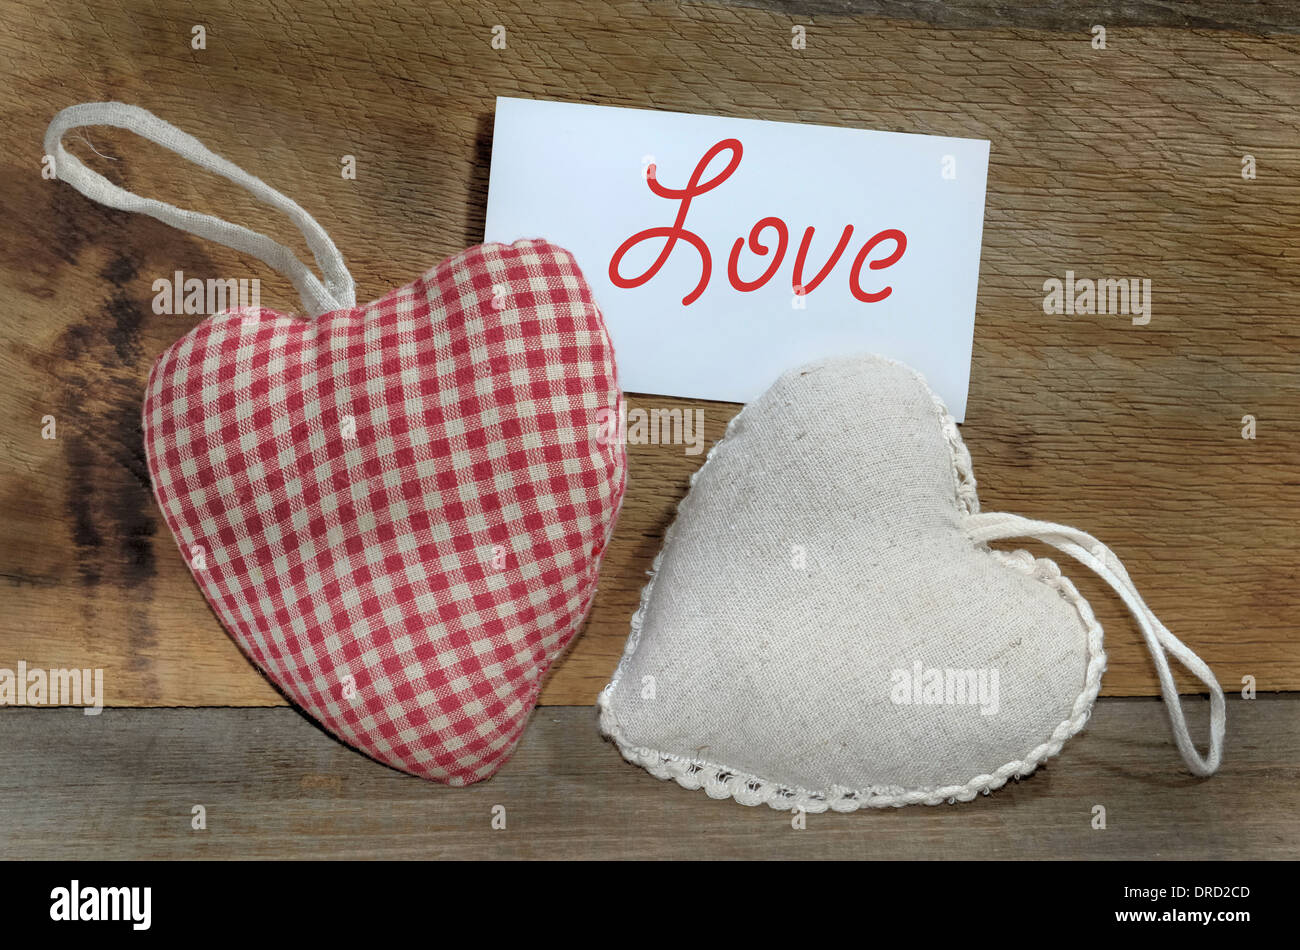 Almohadas de corazon fotografías e imágenes de alta resolución - Alamy